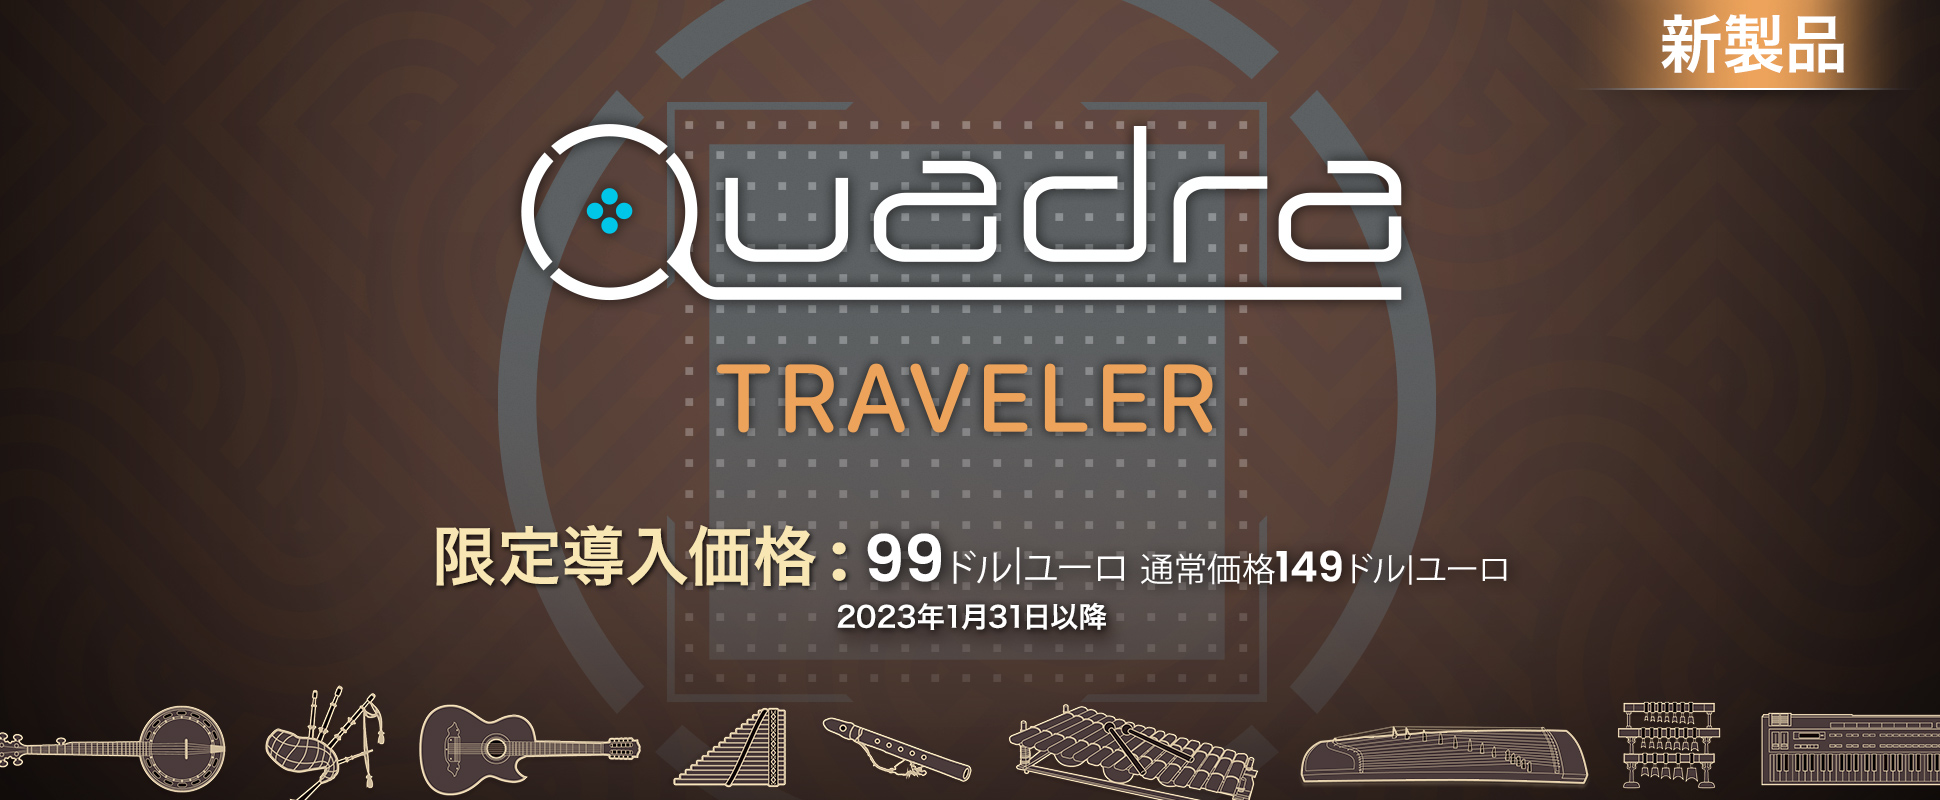 Quadra Traveler - Intro offer